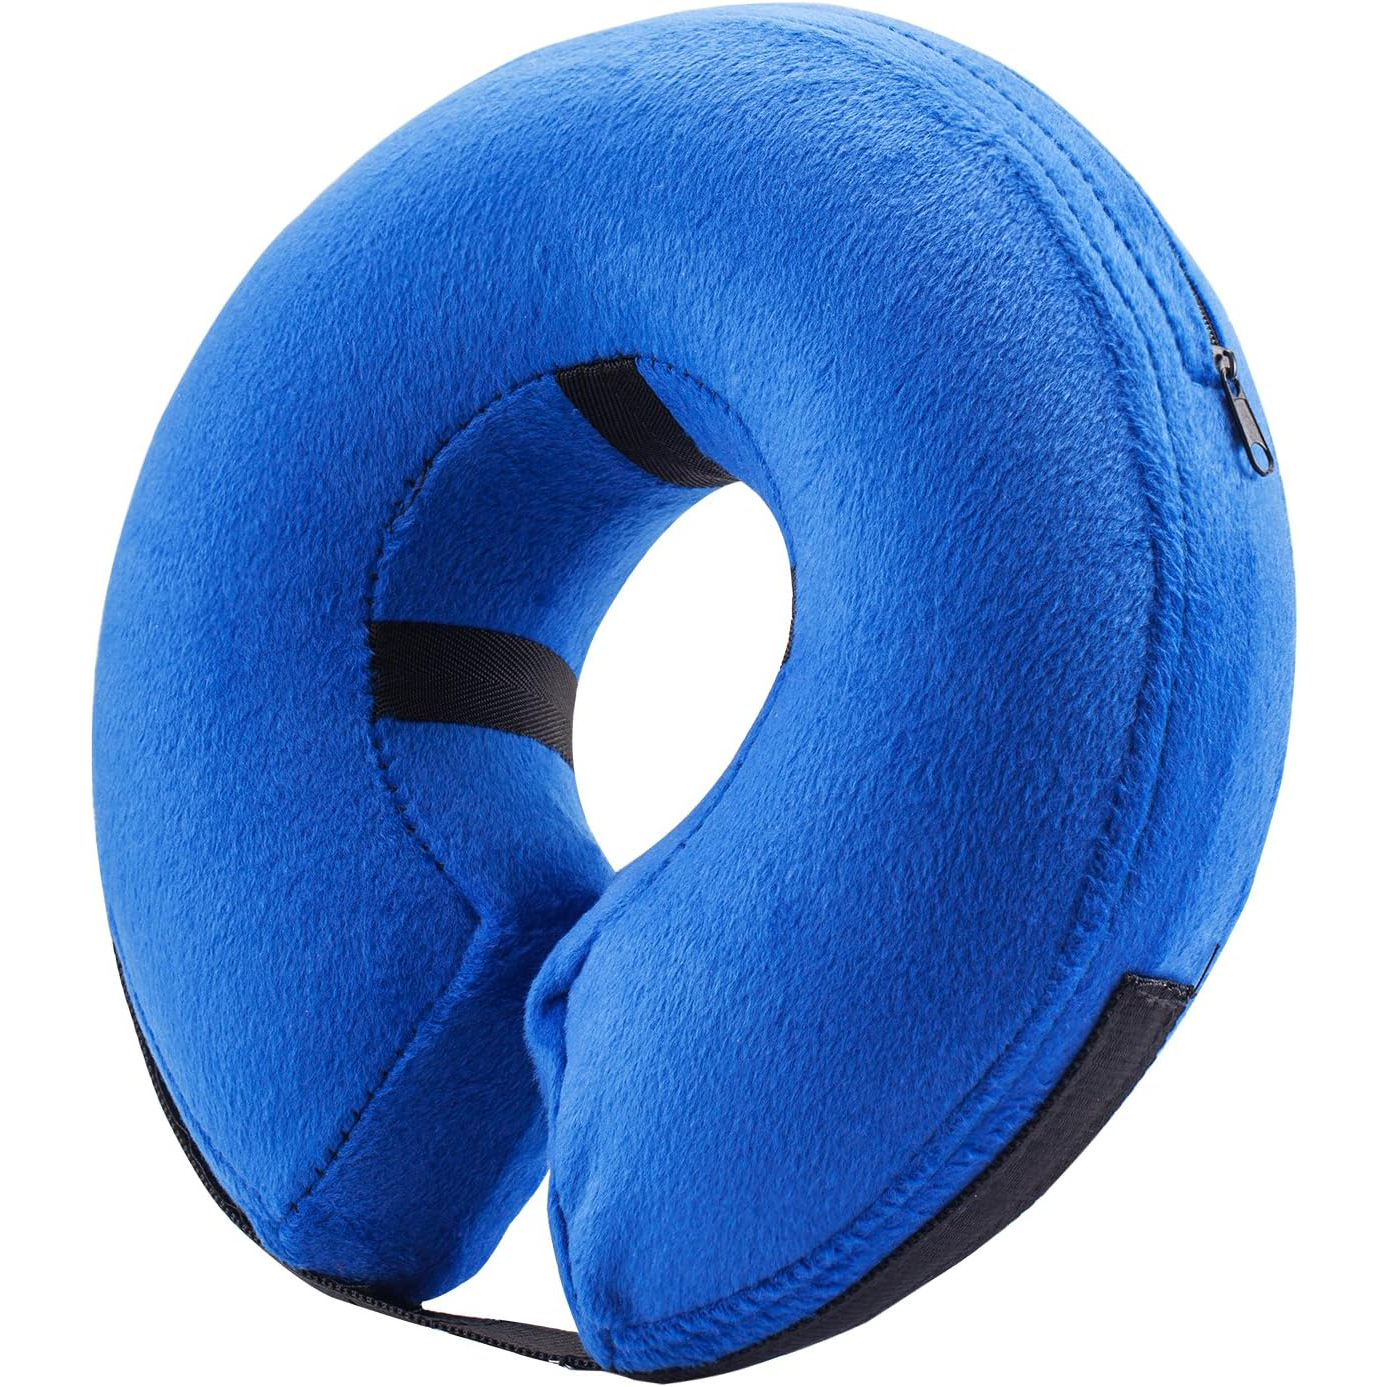 Bencmate Protective Inflatable Collar